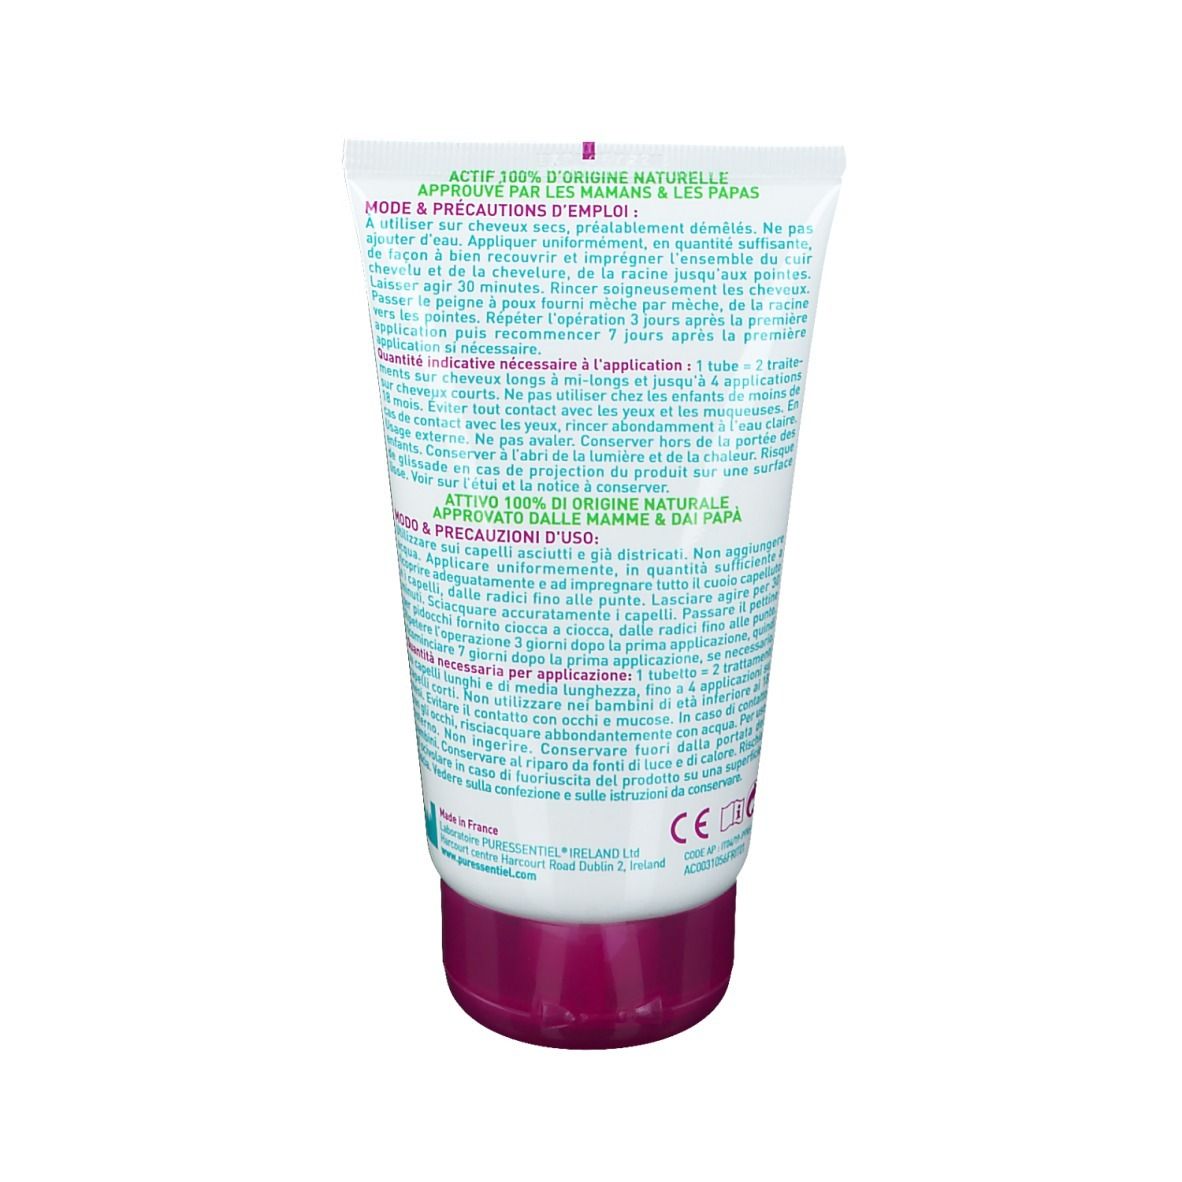 Puressentiel Anti-Pidocchi Shampoo Trattante 2 in 1